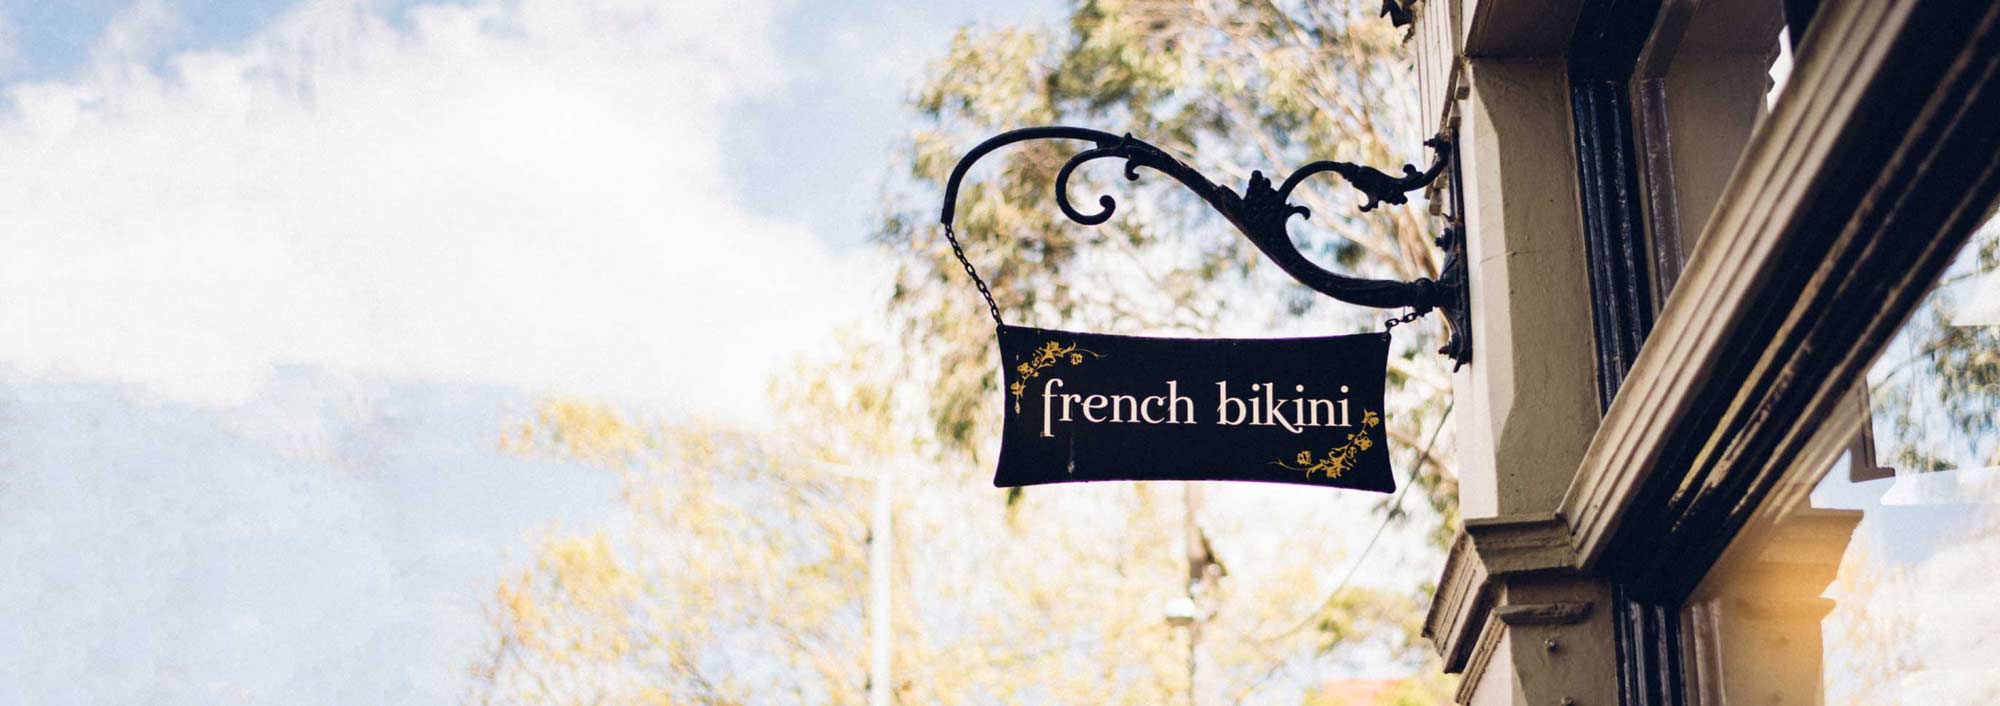 French Bikini Store Front